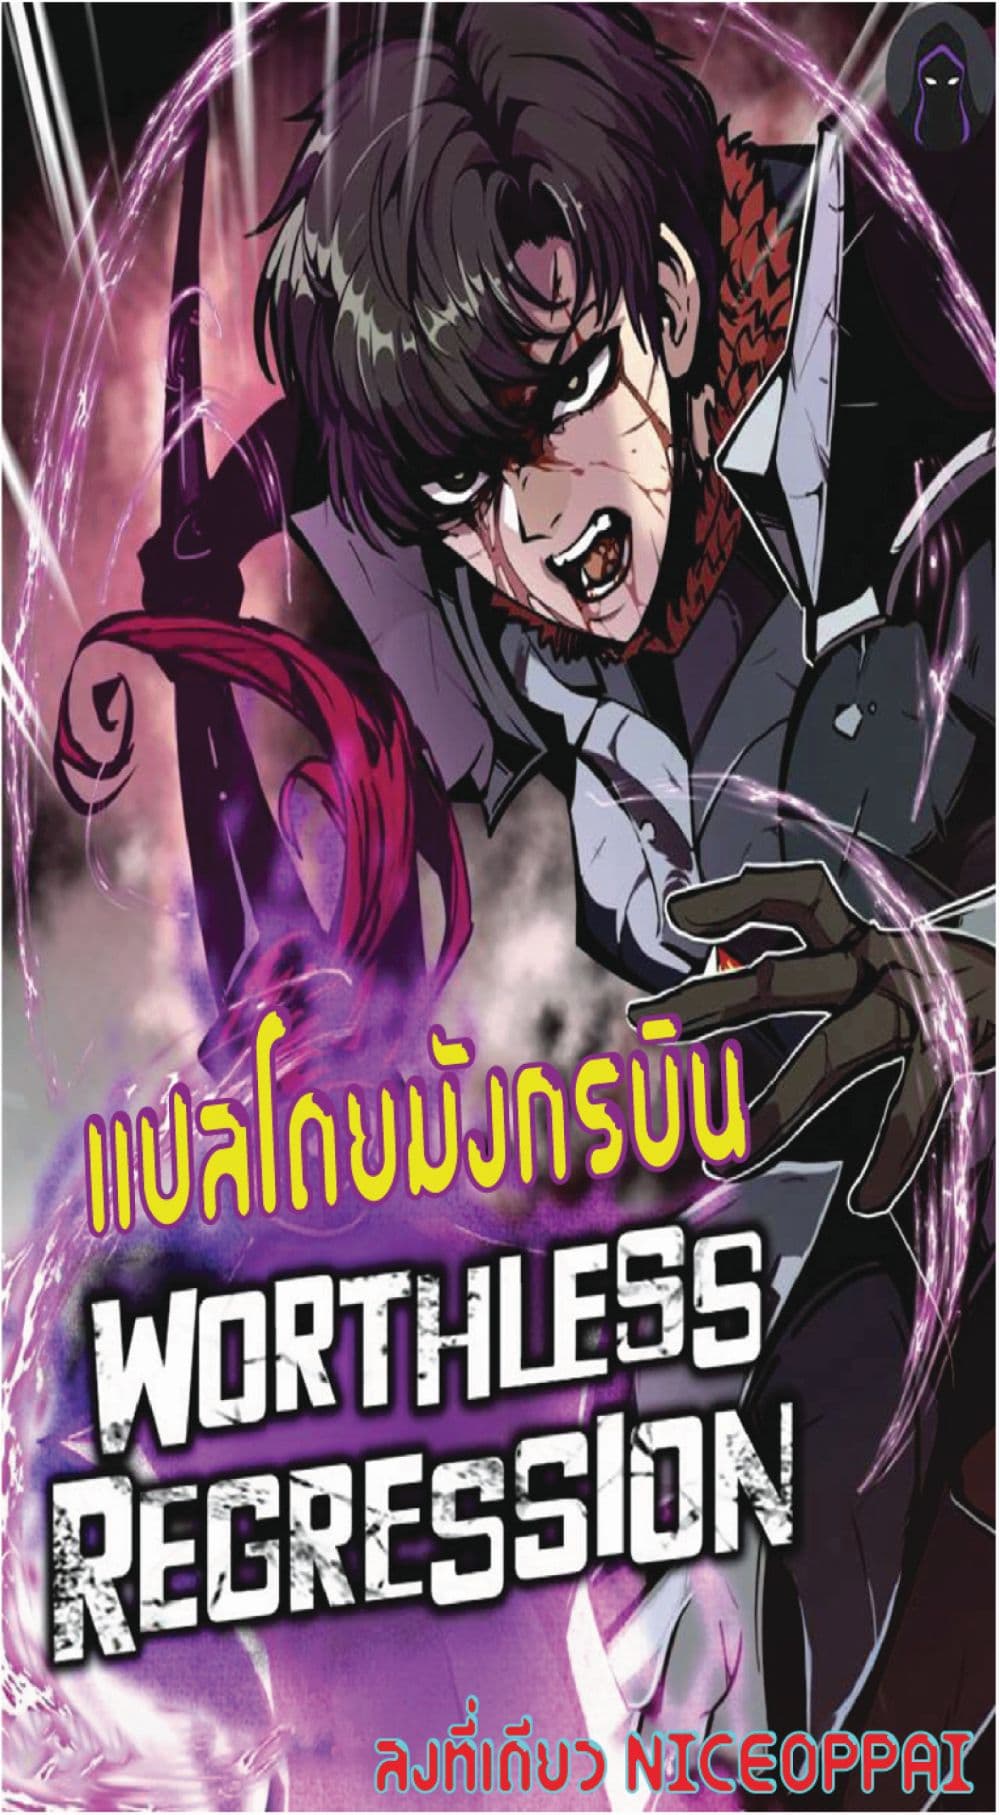 Worthless Regression 13 01